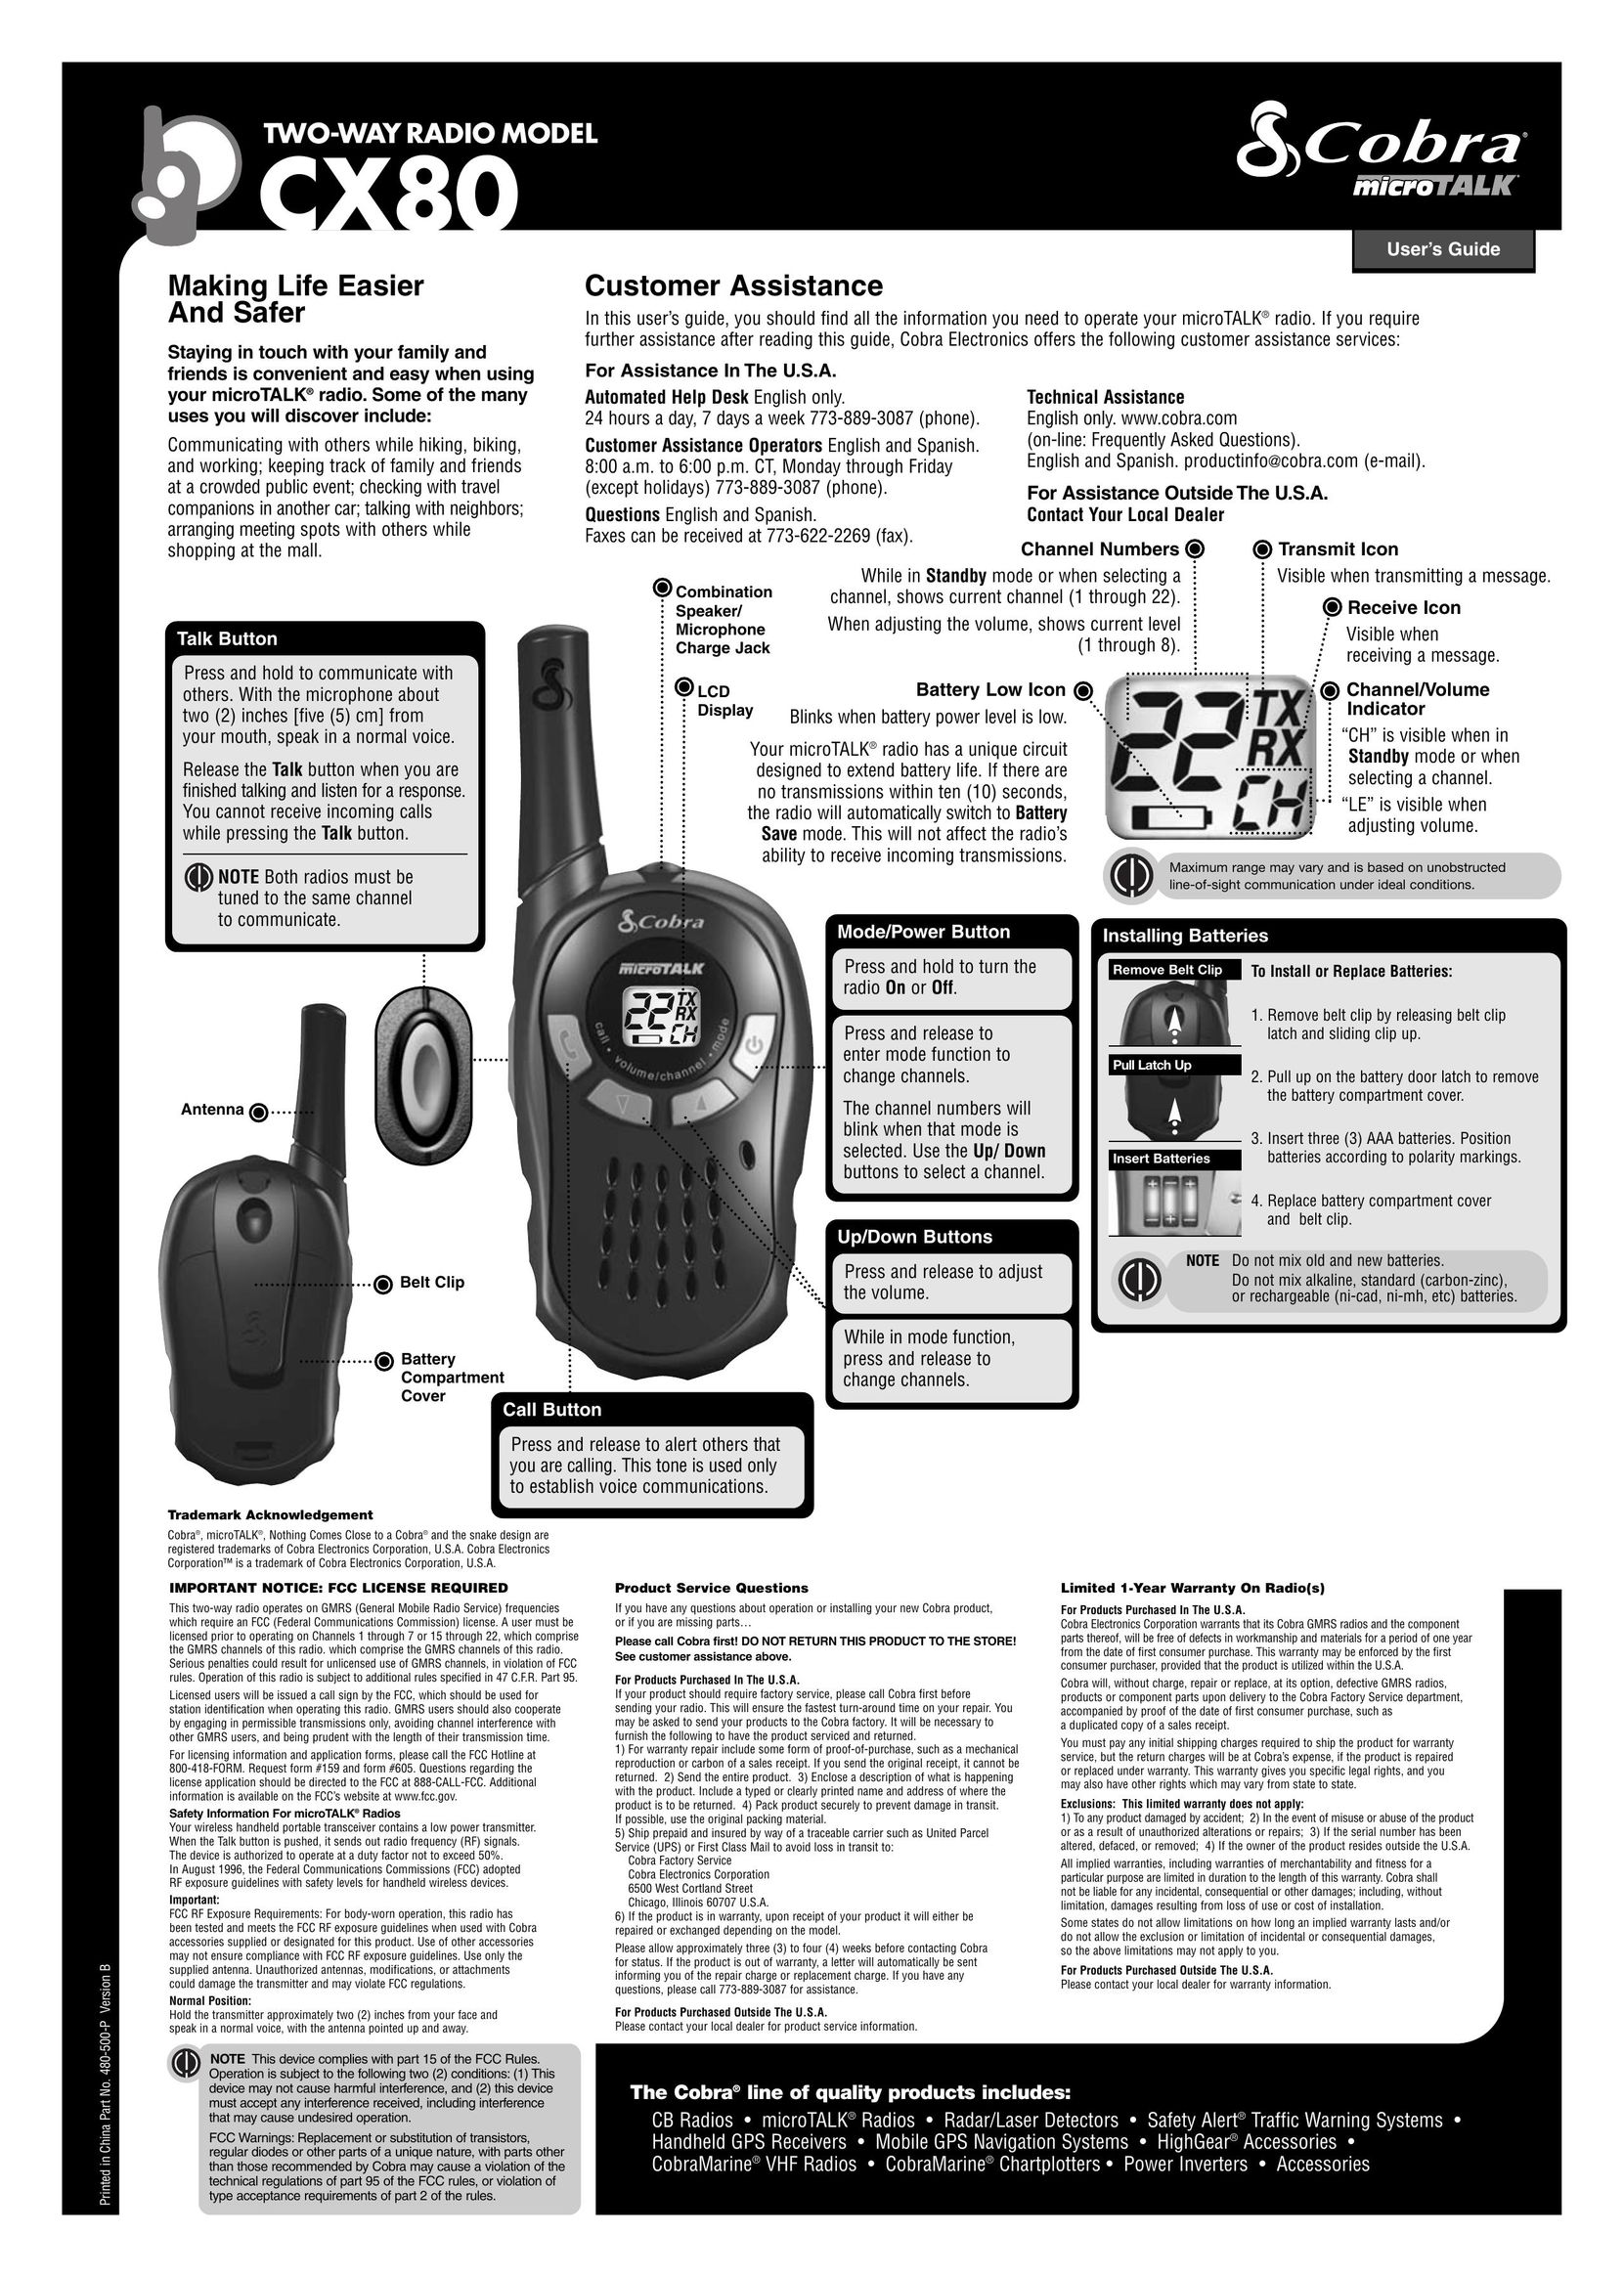 Cobra Electronics CX80 Two-Way Radio User Manual